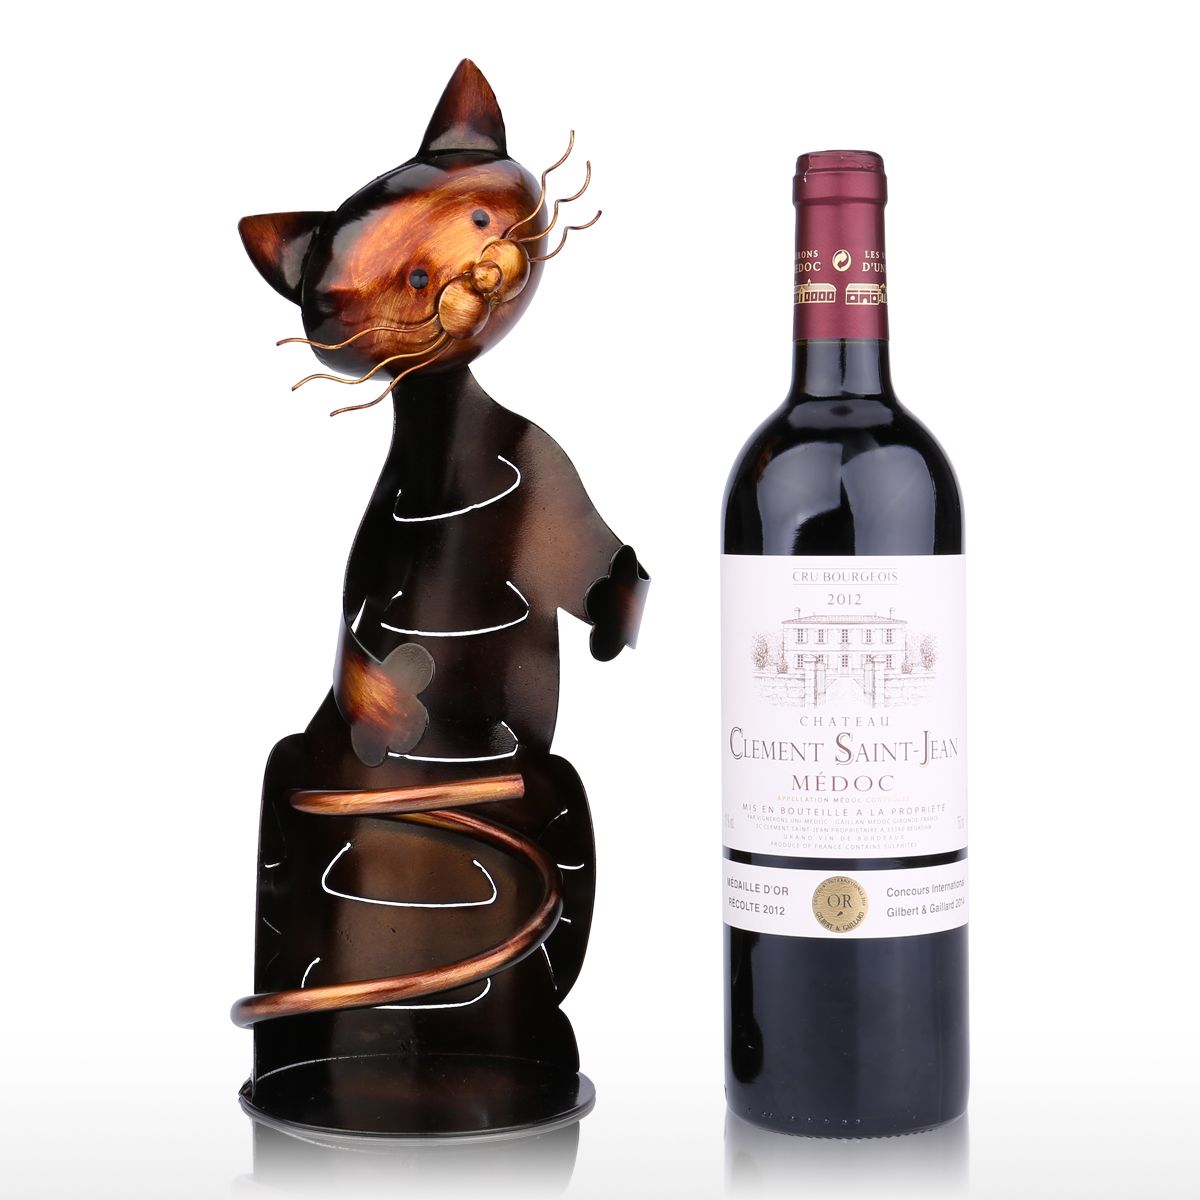 TOOARTS Cat Wine Rack Wine Holder Shelf Metal Practical Sculpture Wine stand Home Decoration Interior Crafts Christmas Gift